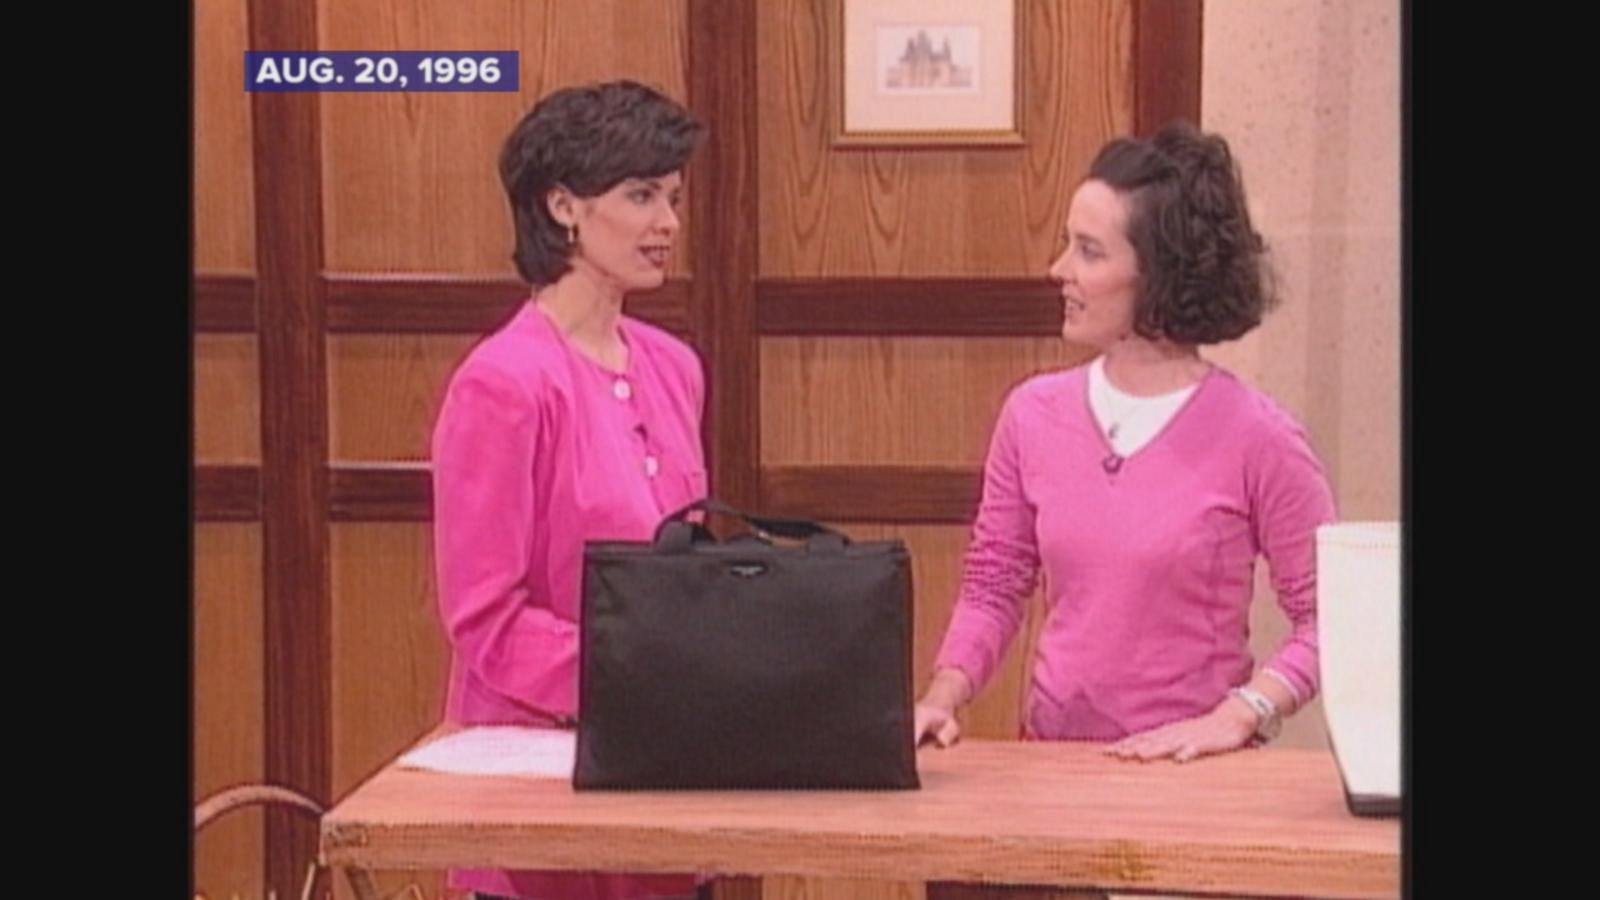 Aug. 20, 1996: Kate Spade talks about handbags - Good Morning America